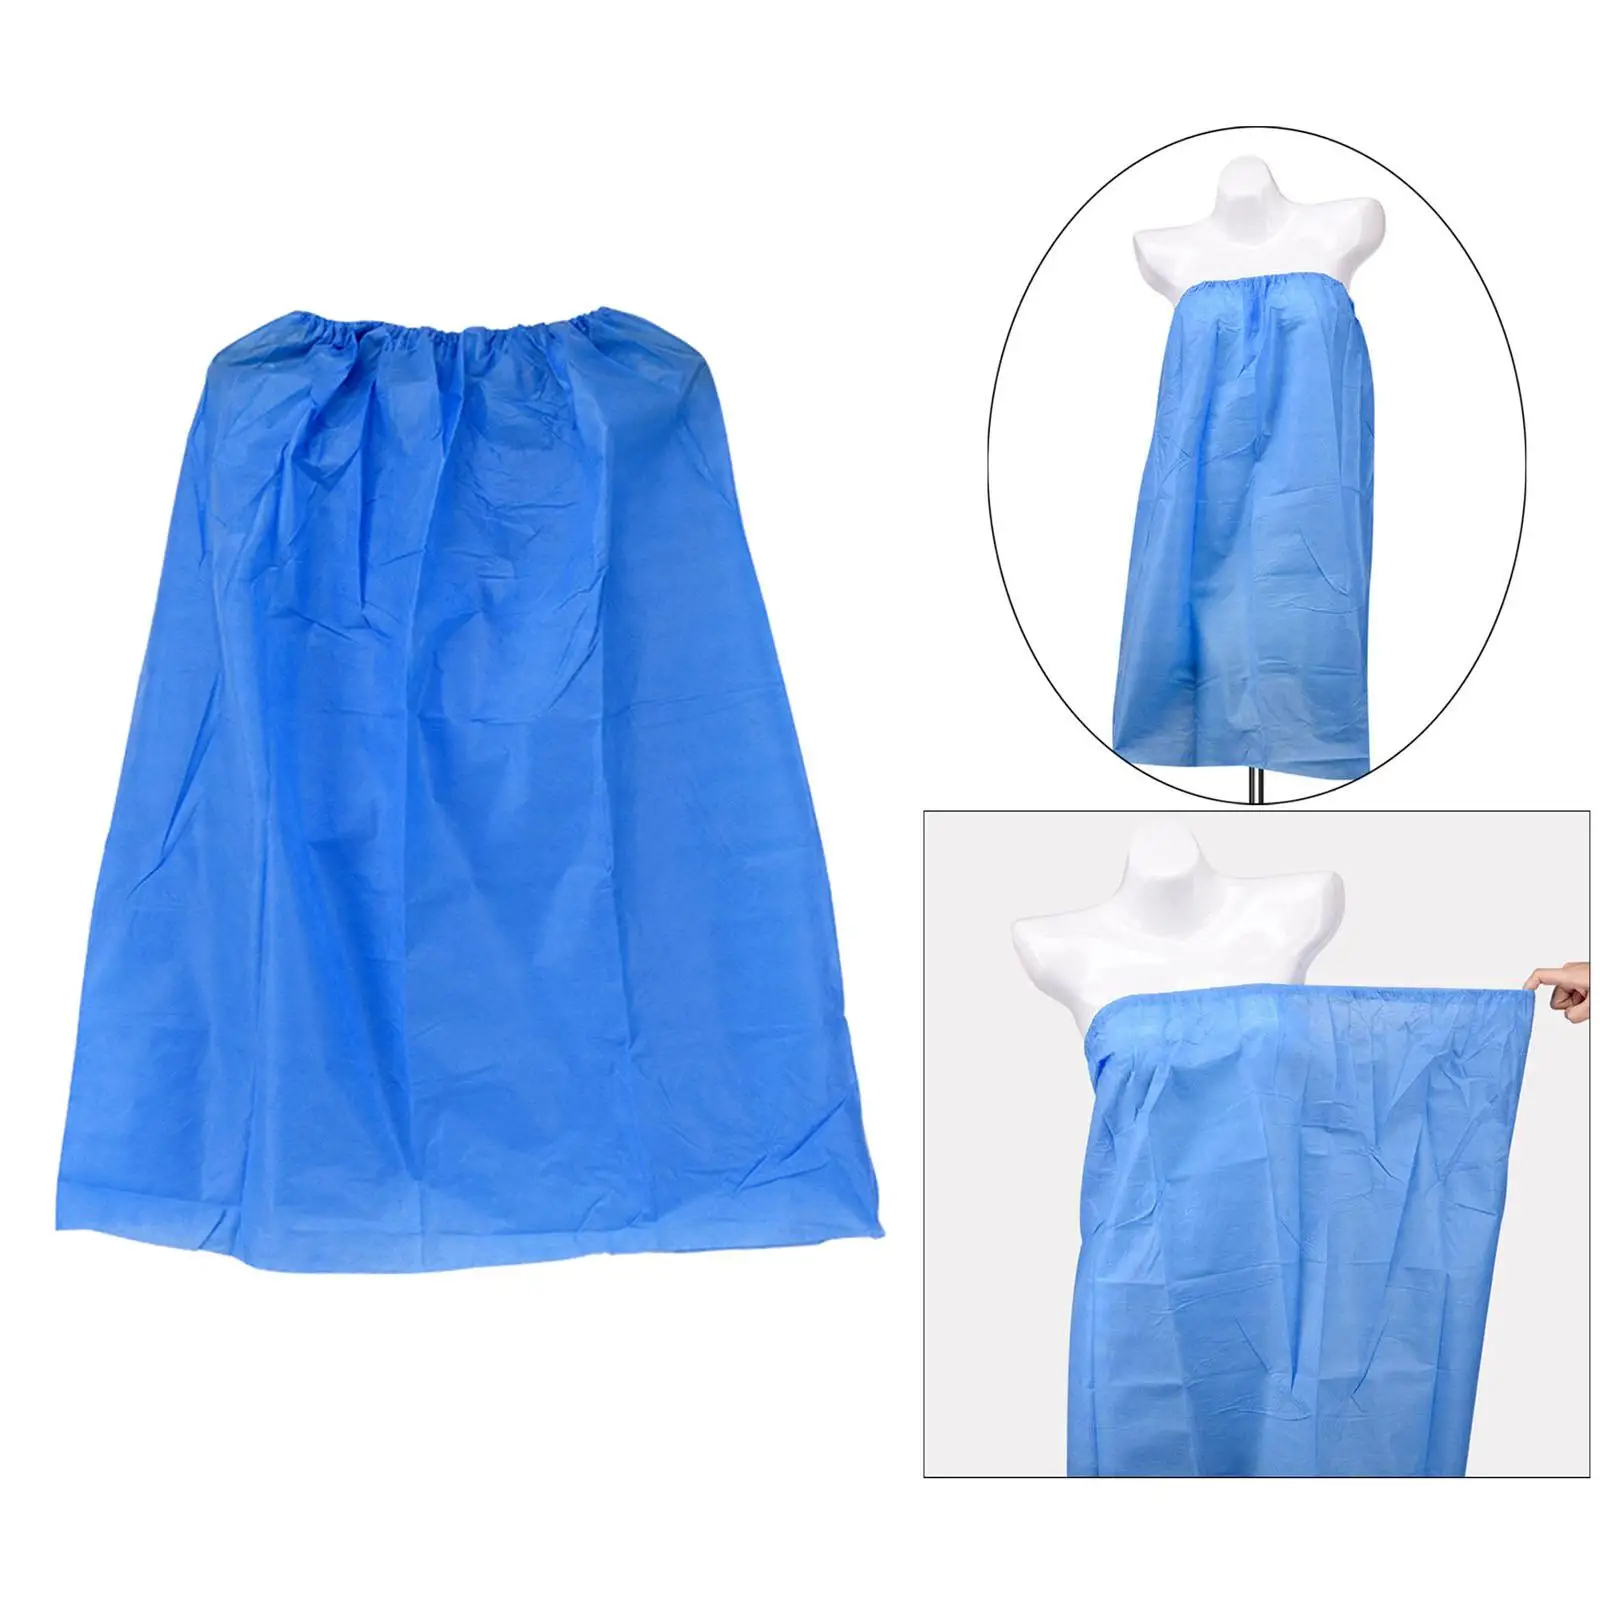 10pcs Sauna Disposable Bath Skirt Bath Wrap for Spa for Women Girls Blue